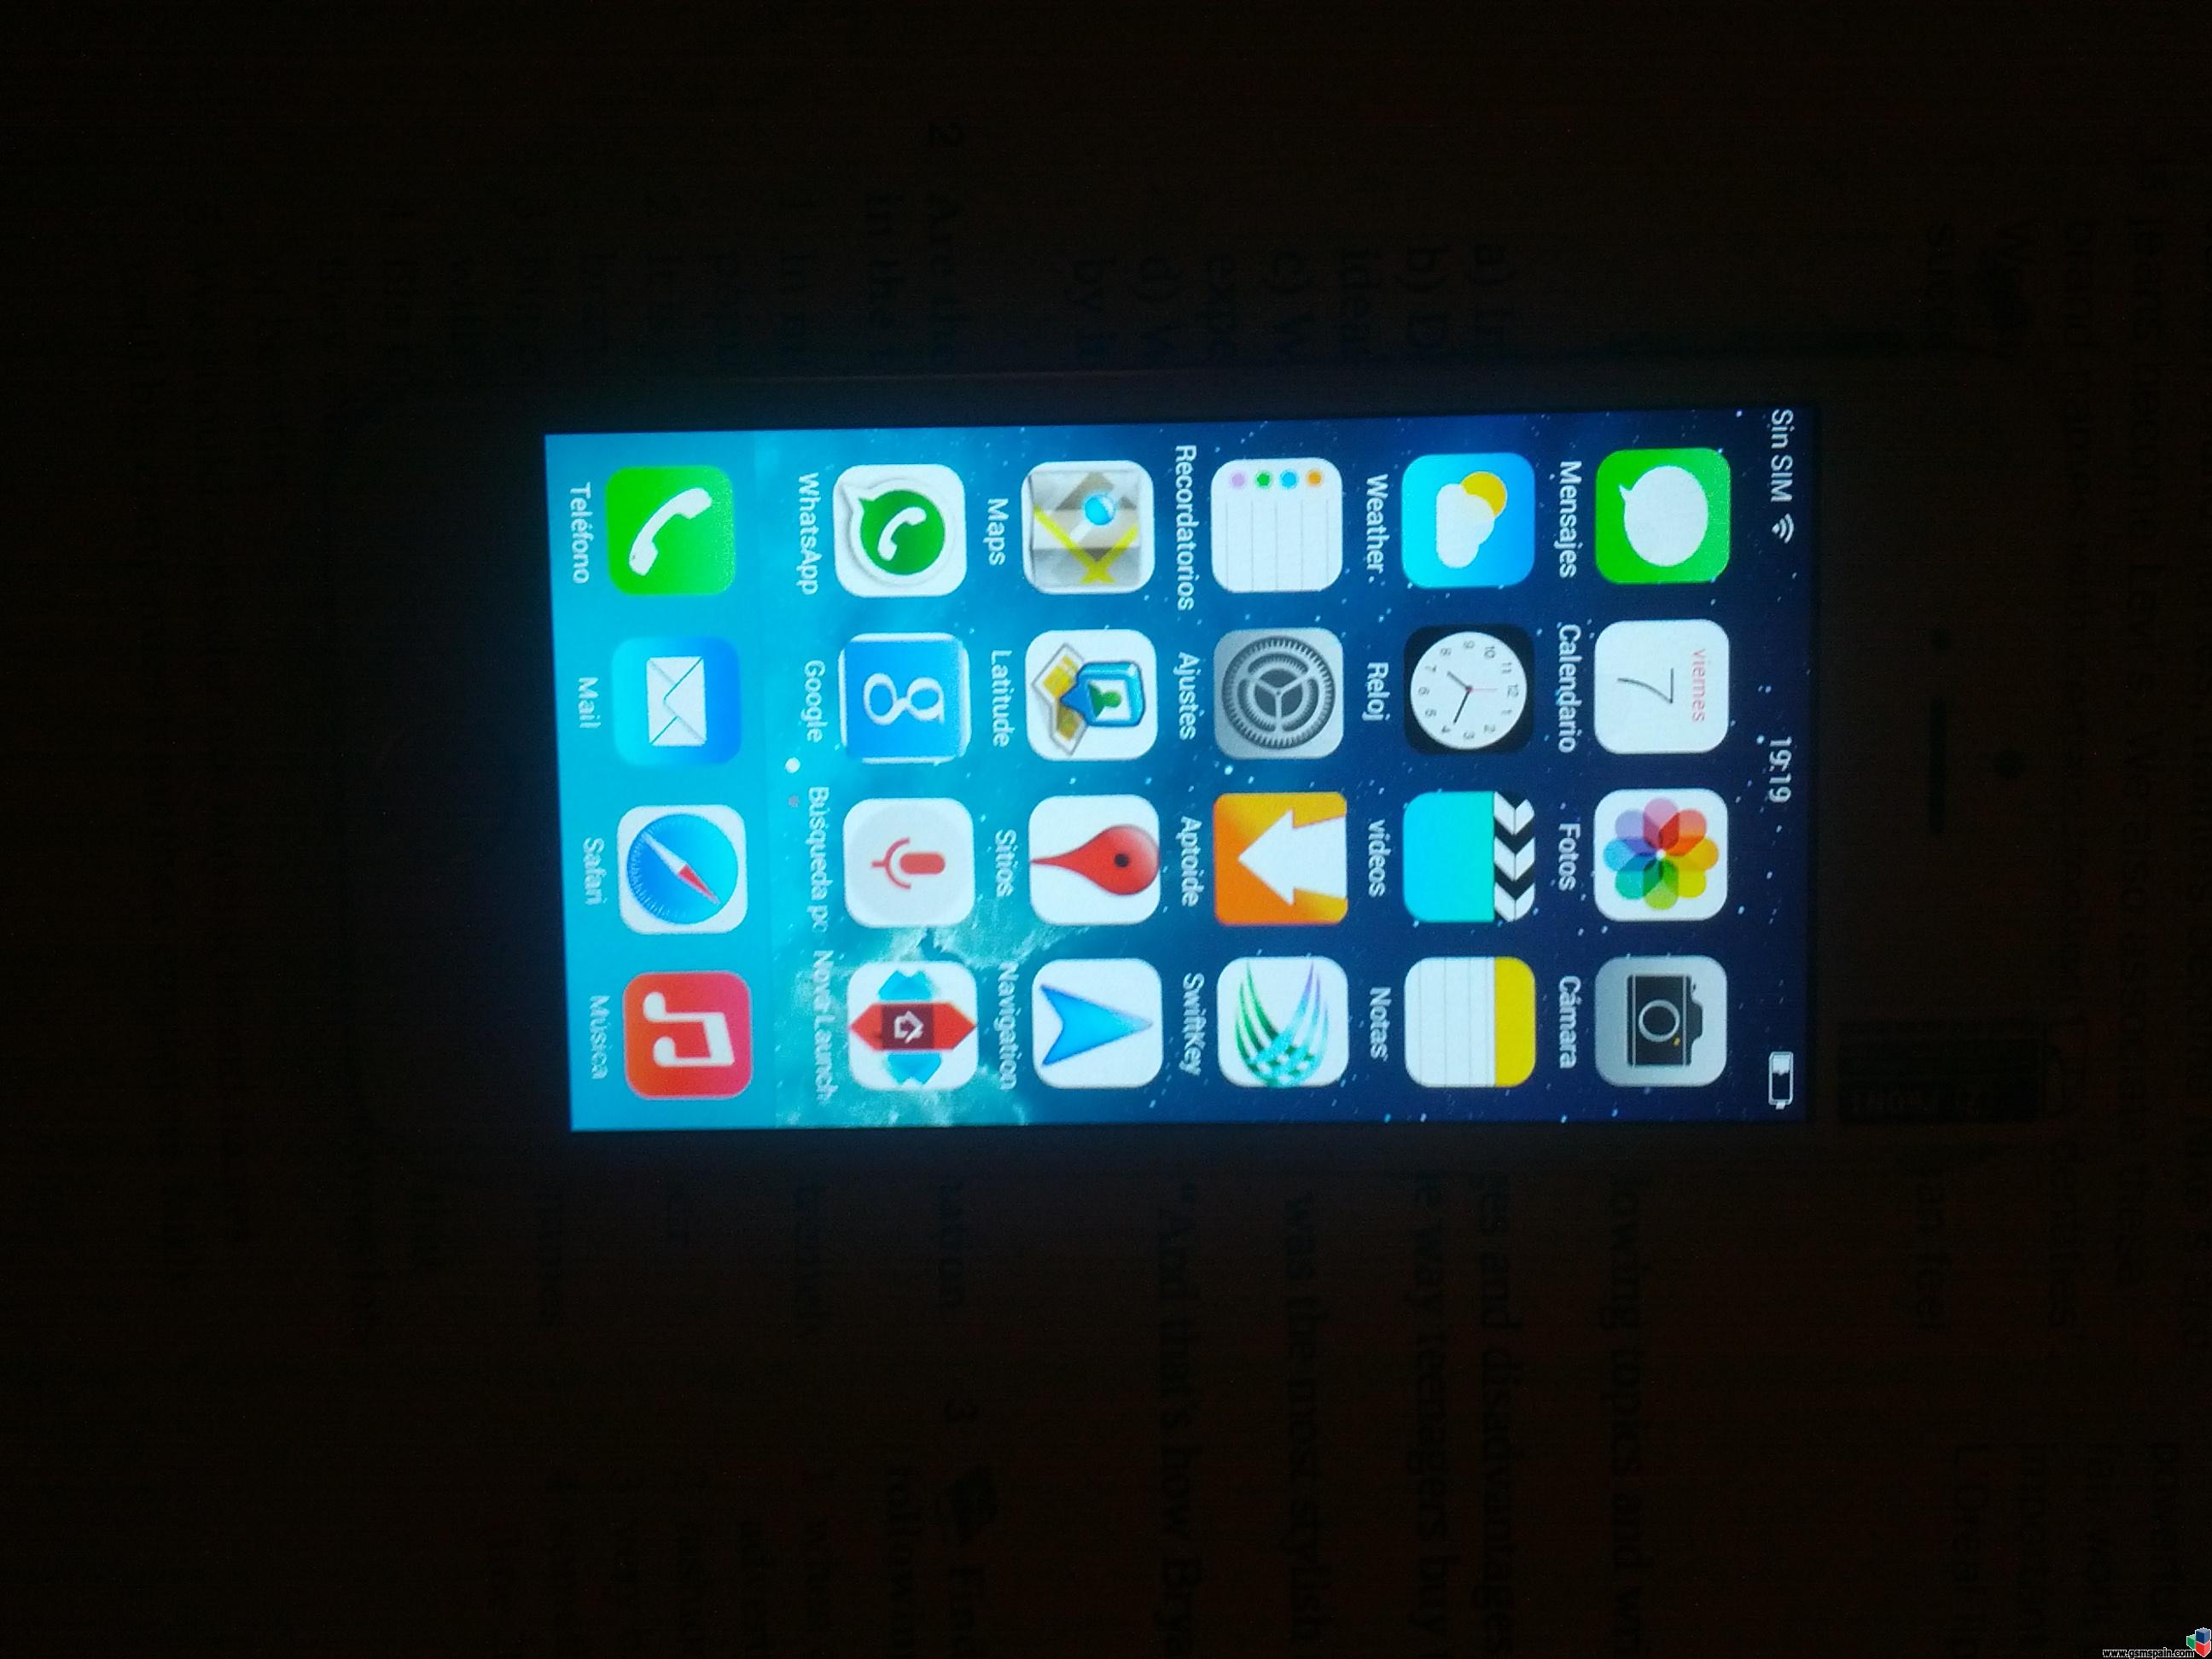 [VENDO] Replica 1:1 Iphone 5s Gold Envo desde Espaa